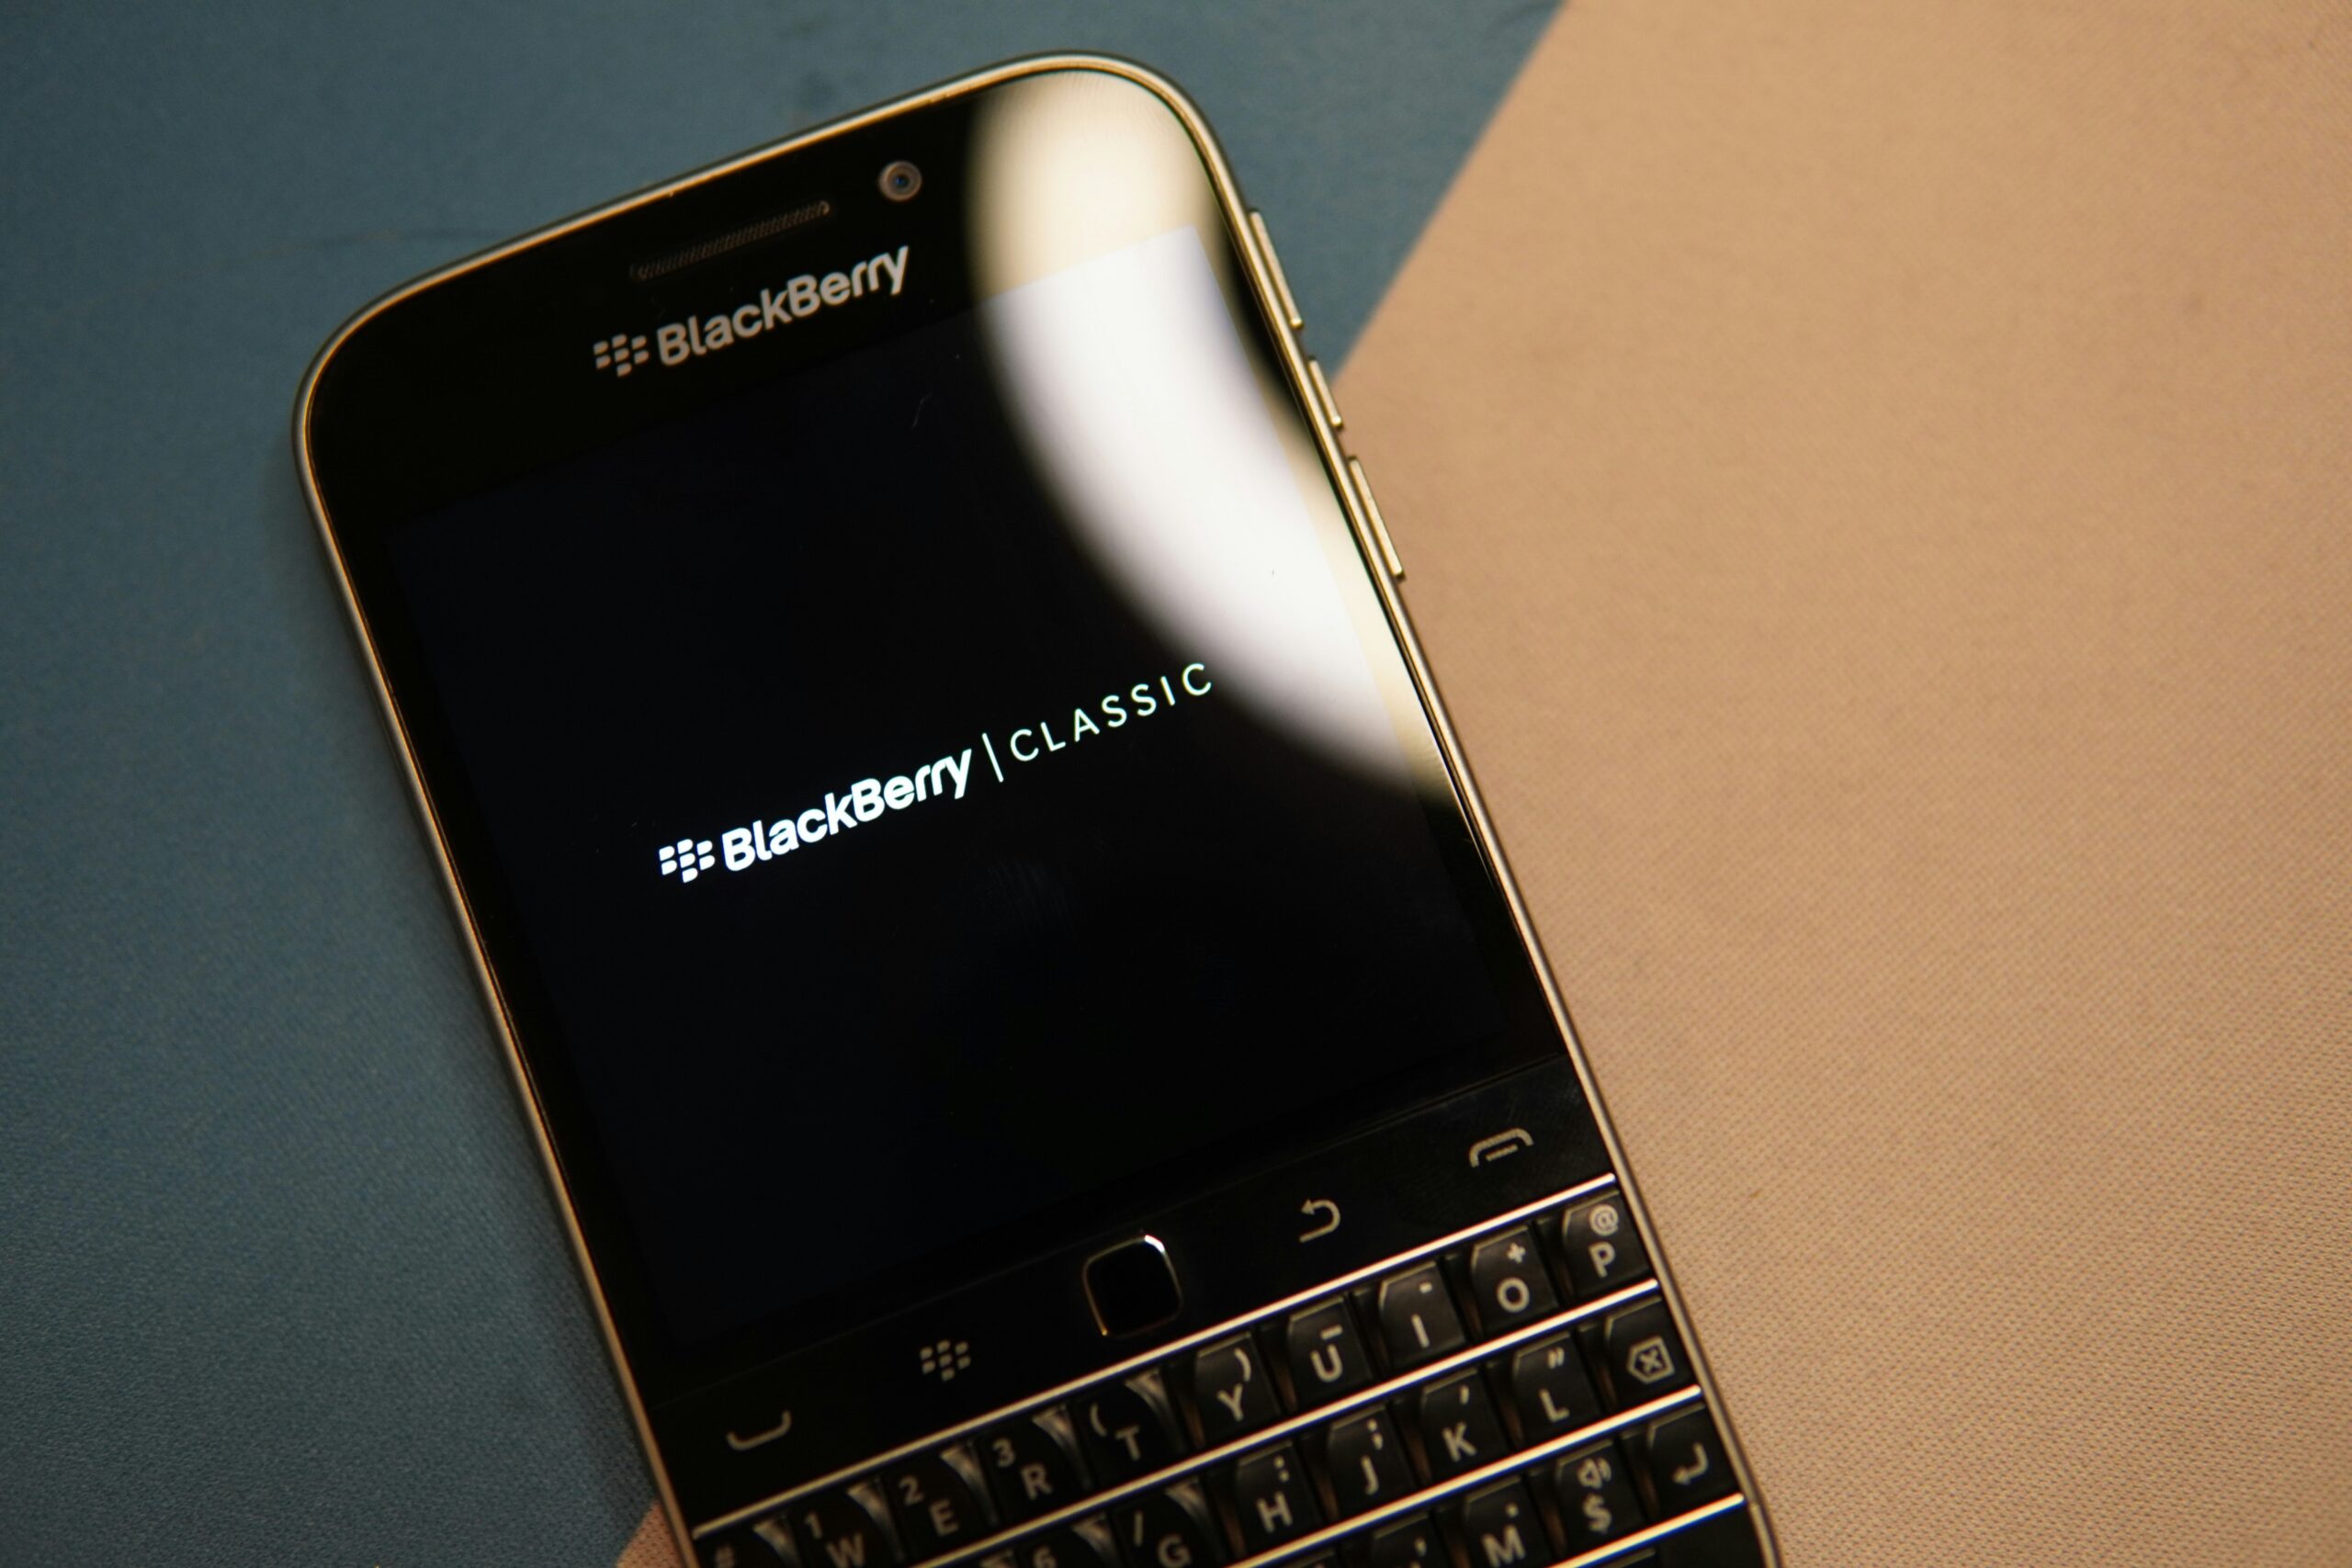 5. BlackBerry Smartphone